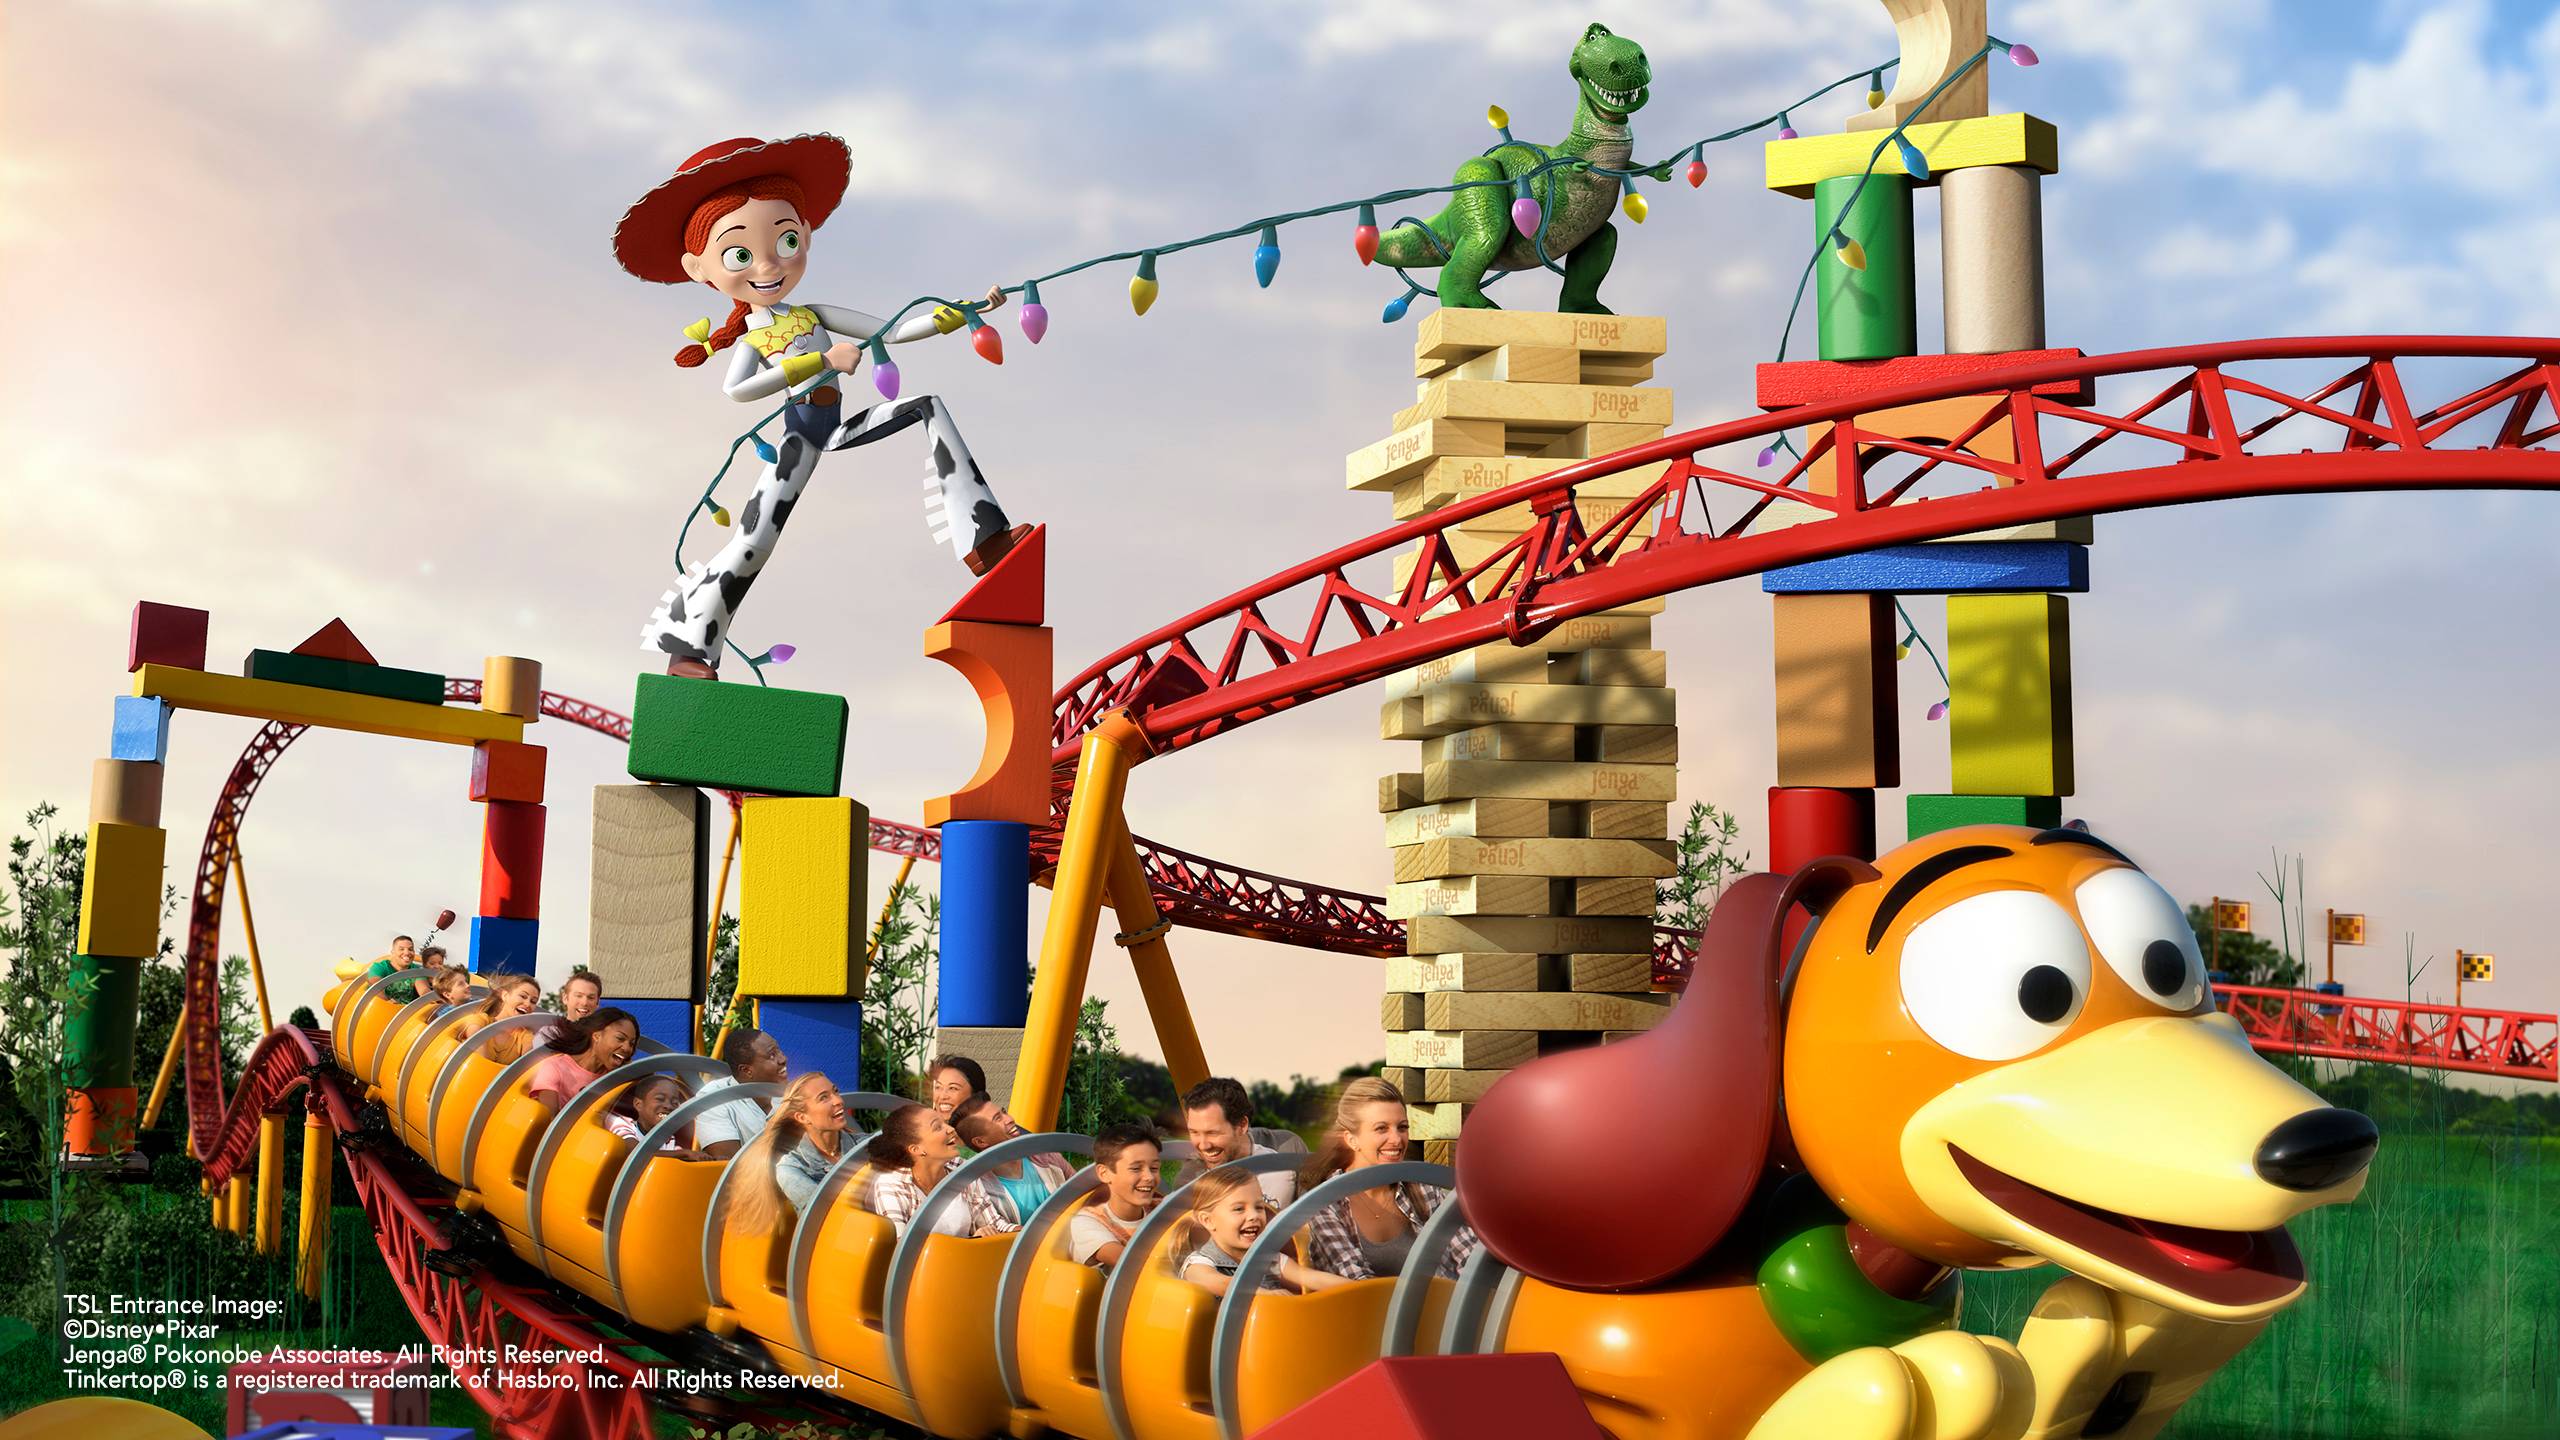 Slinky Dog Dash to feature on-ride photo via MagicBand